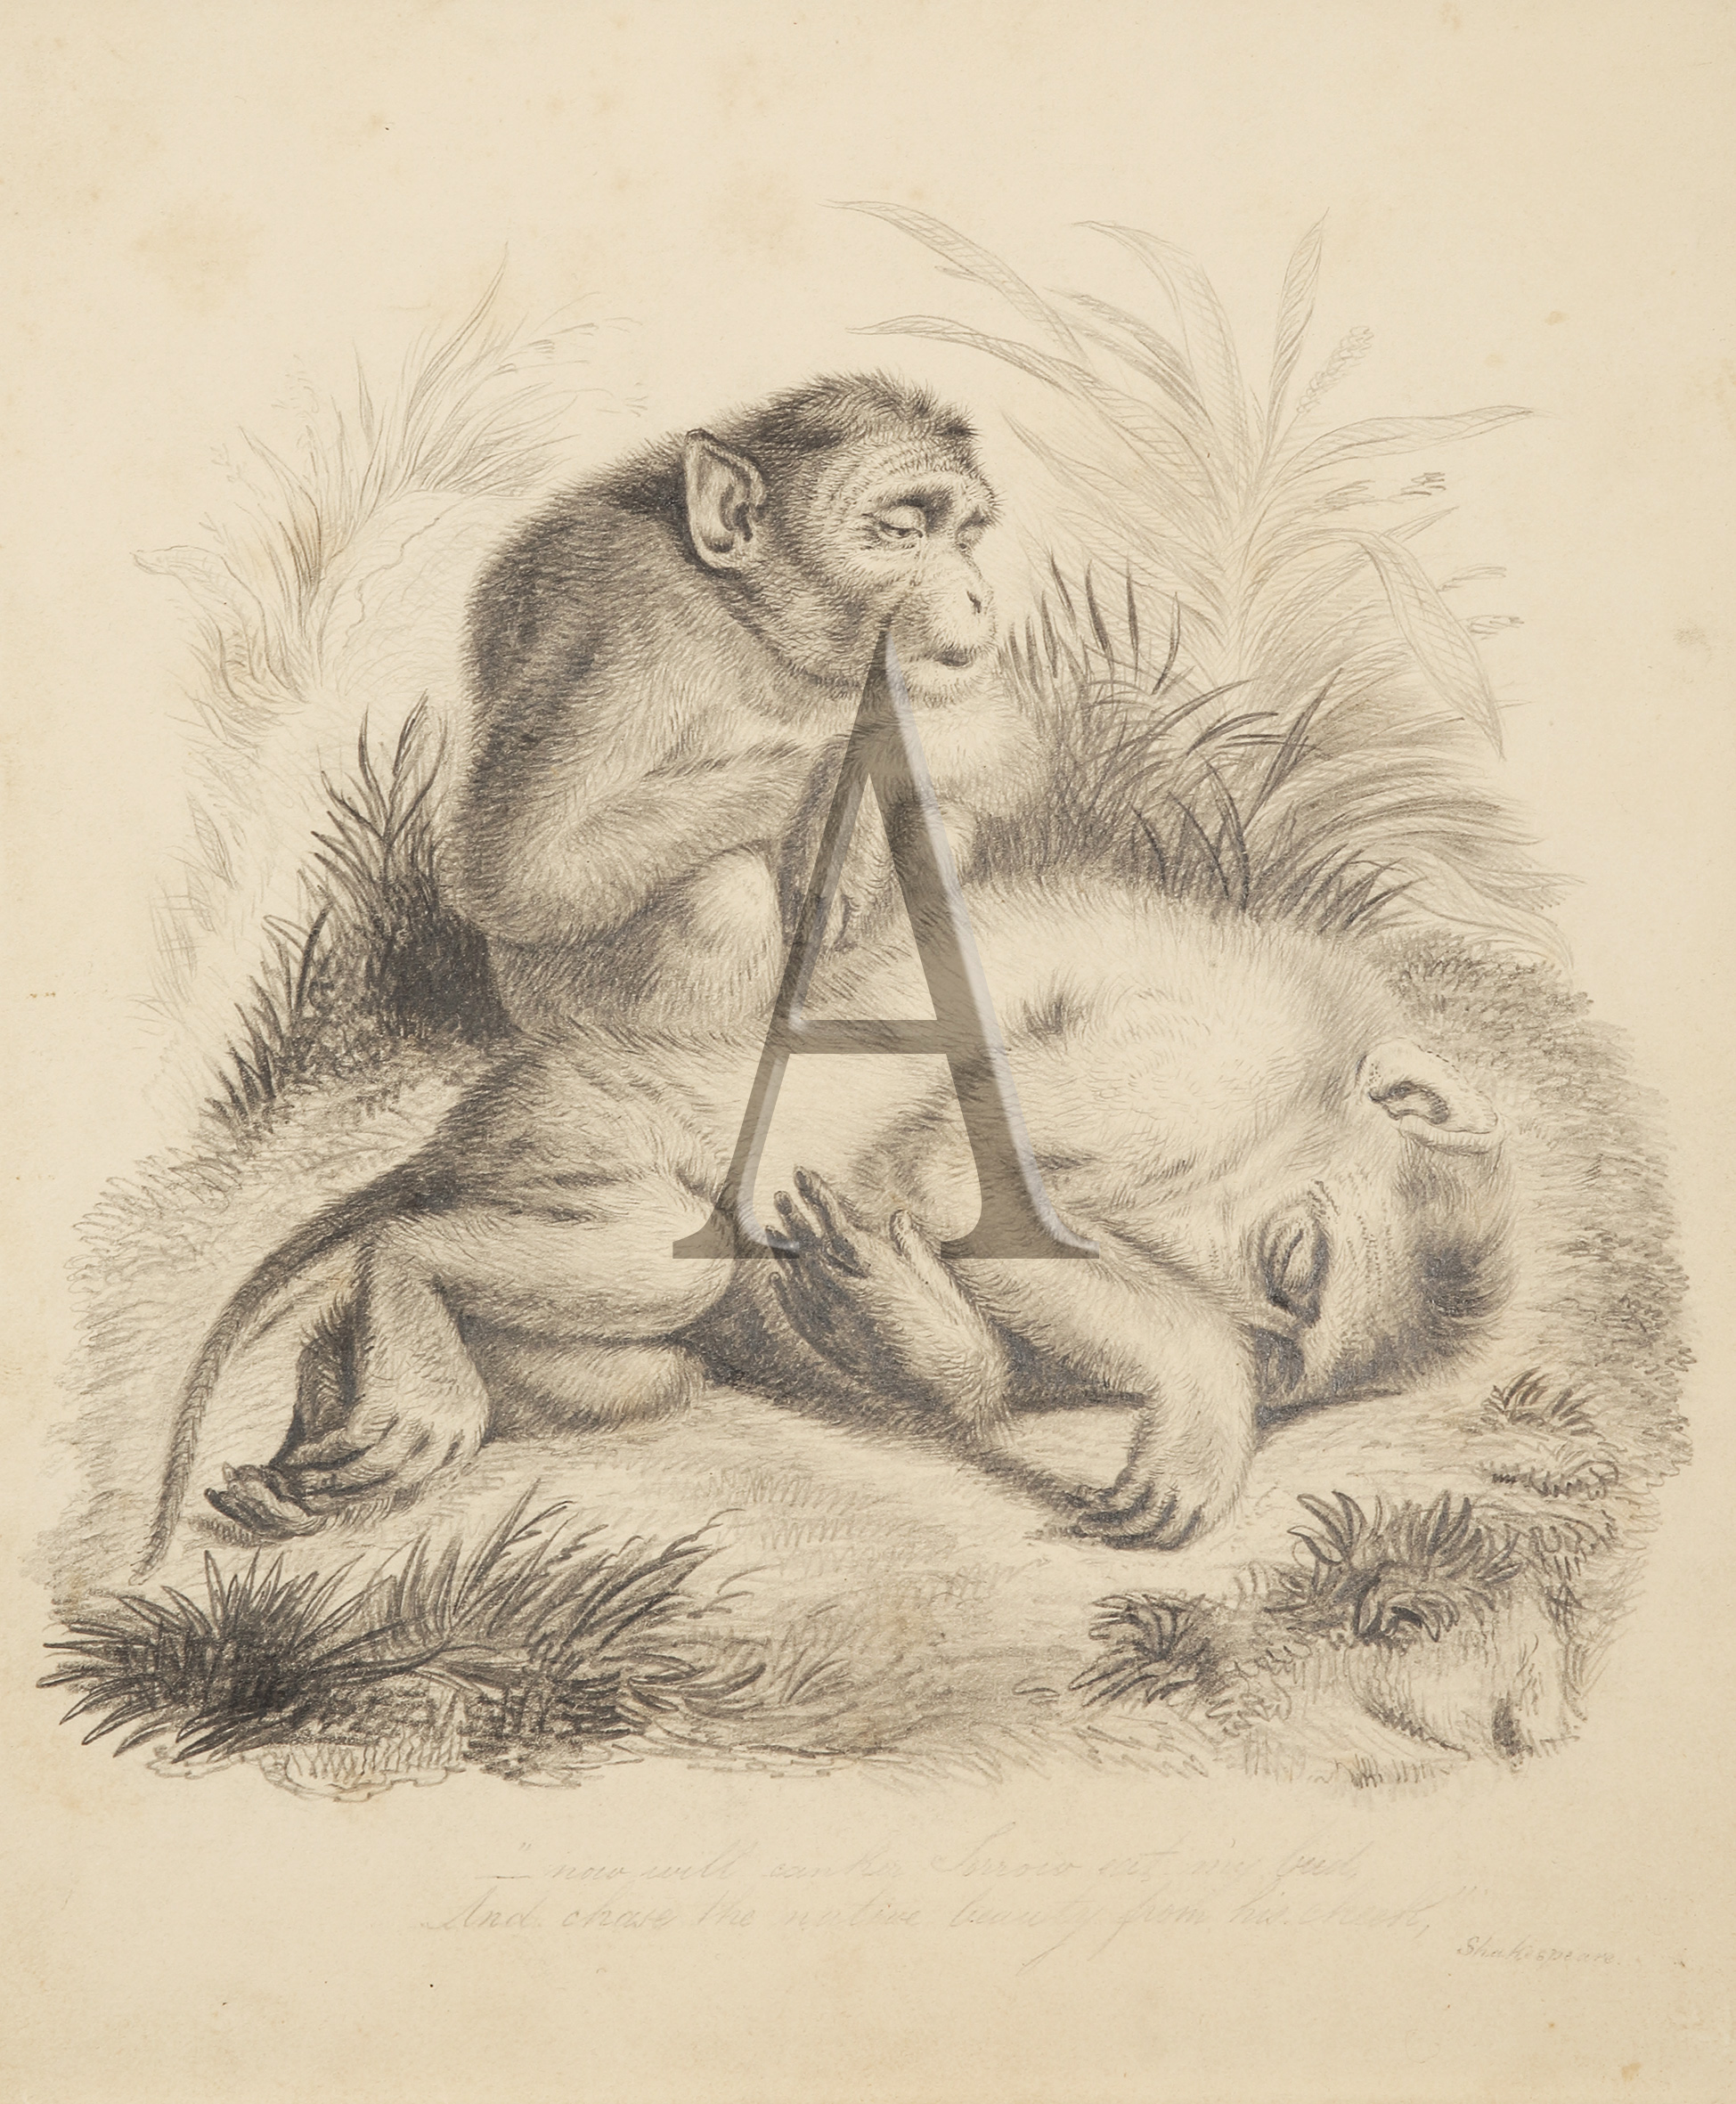 Monkeyana - Antique Print from 1827